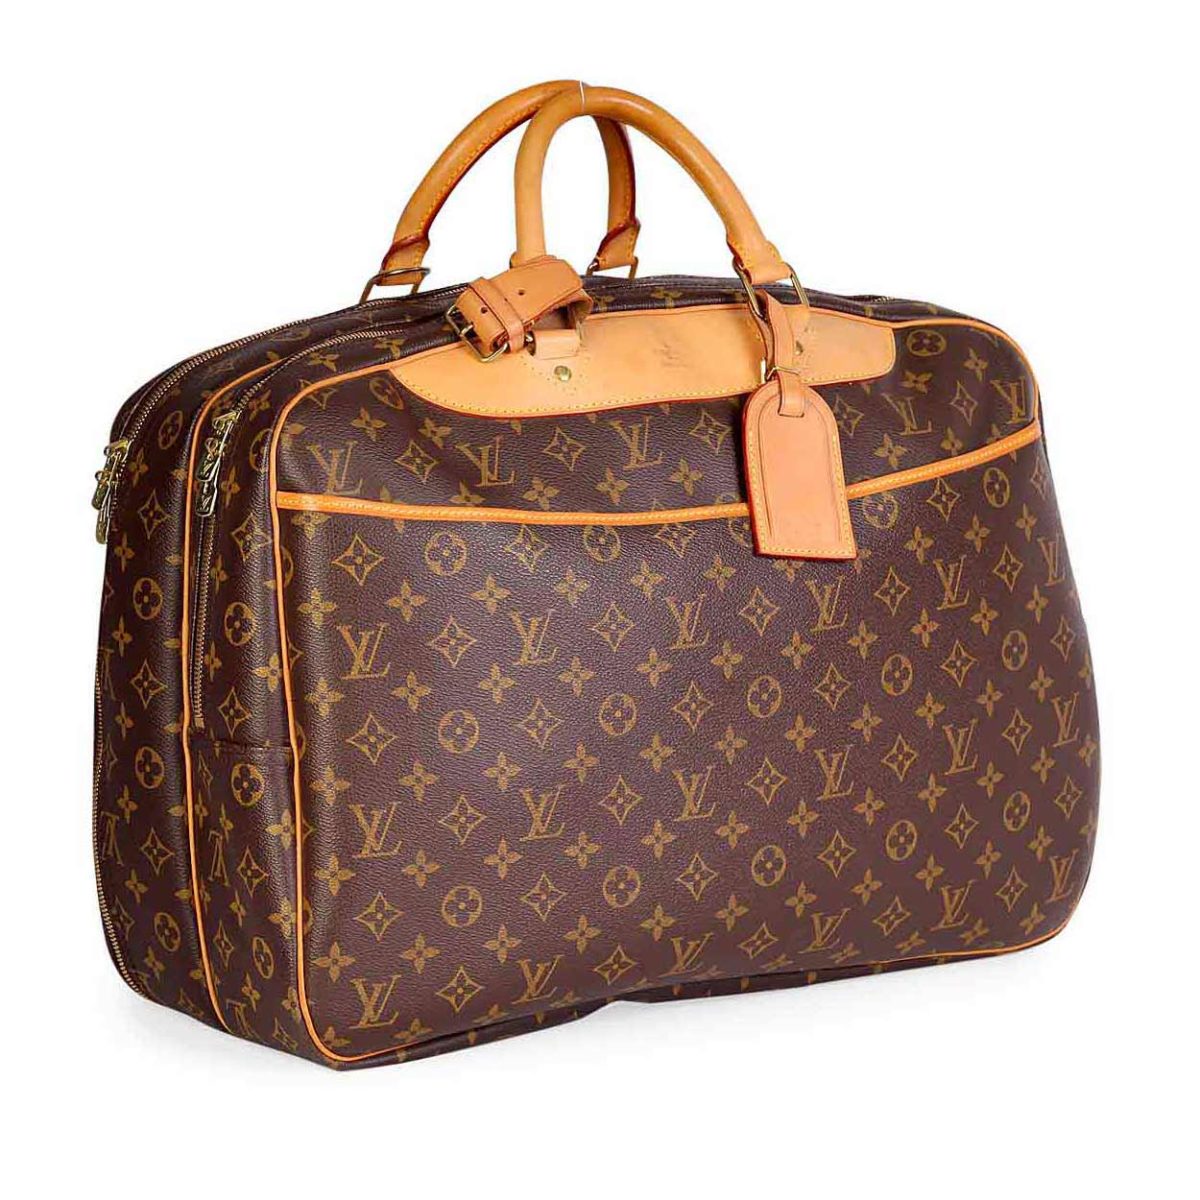 Most Popular Louis Vuitton Bag Right Nowadays | semashow.com